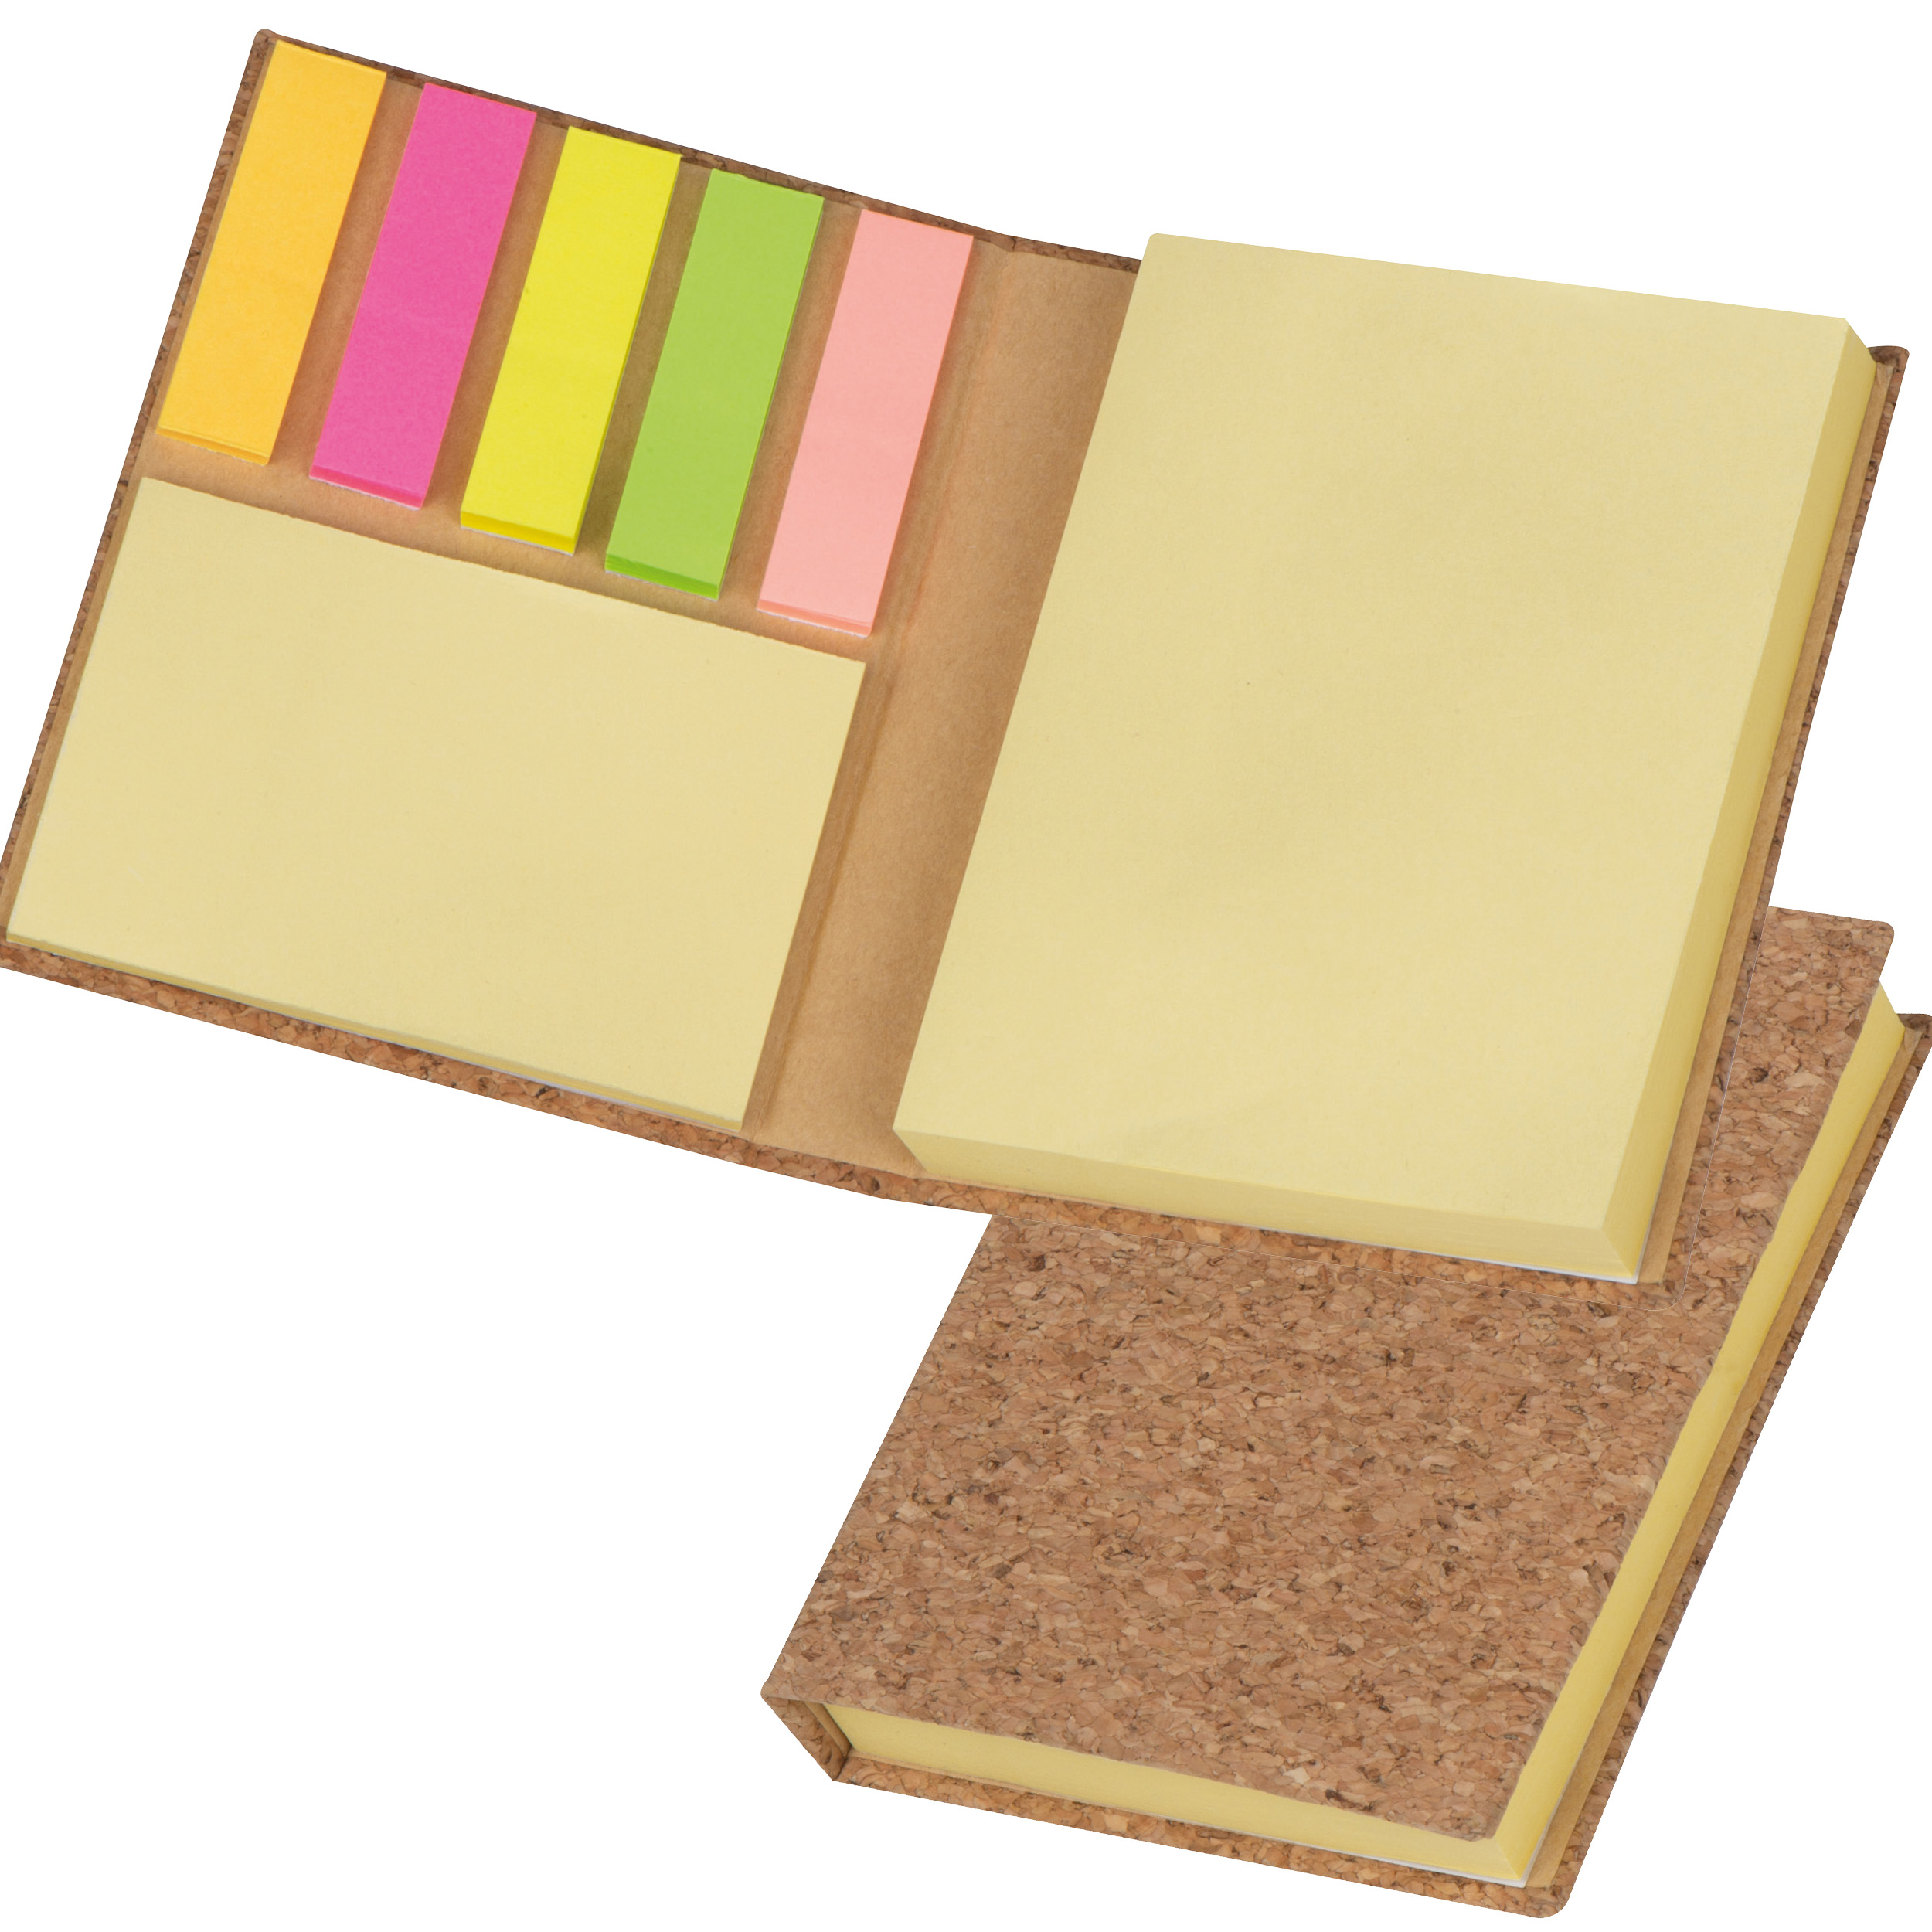 Sticky marker and sticky note book in a cork envelope